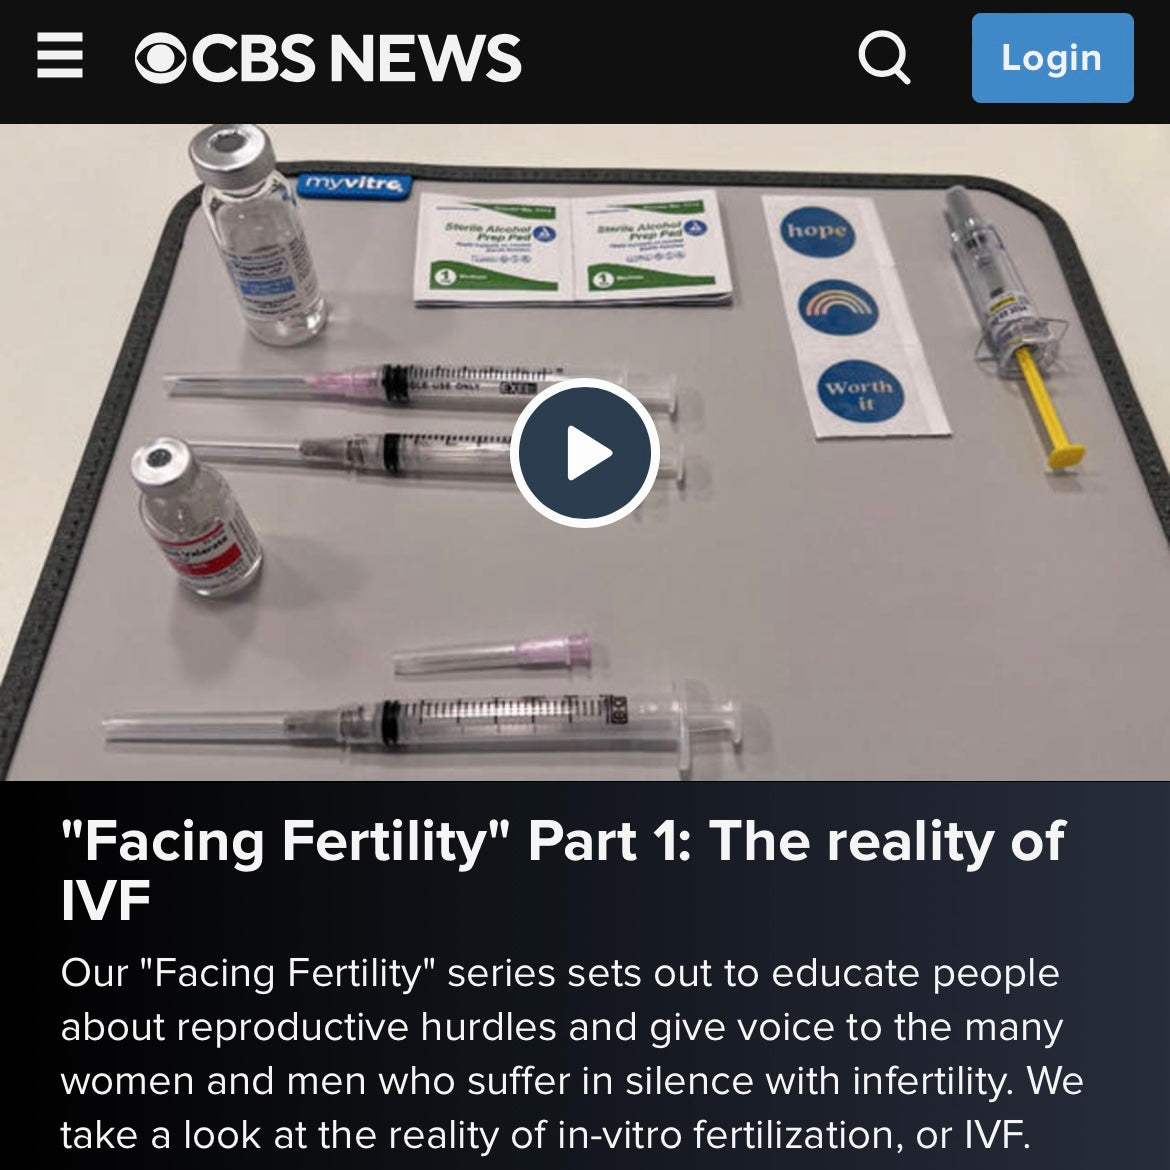 Organize Fertility Medication with the MyVitro Fertility Caddy for